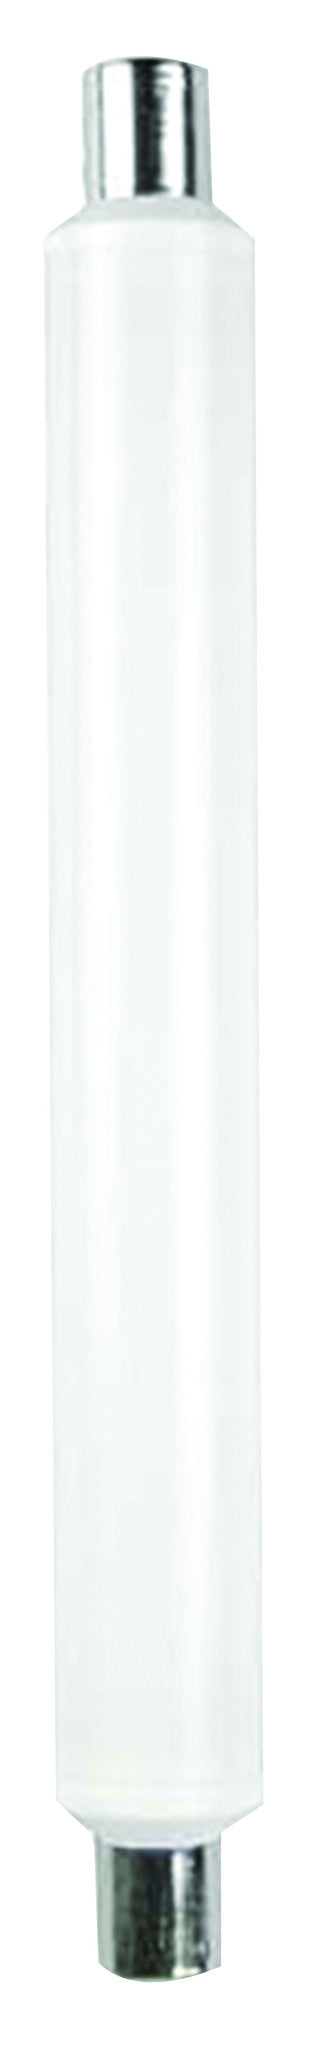 997103 - Tube Linolite LED S15 221mm 3,5W 2700K 320Lm